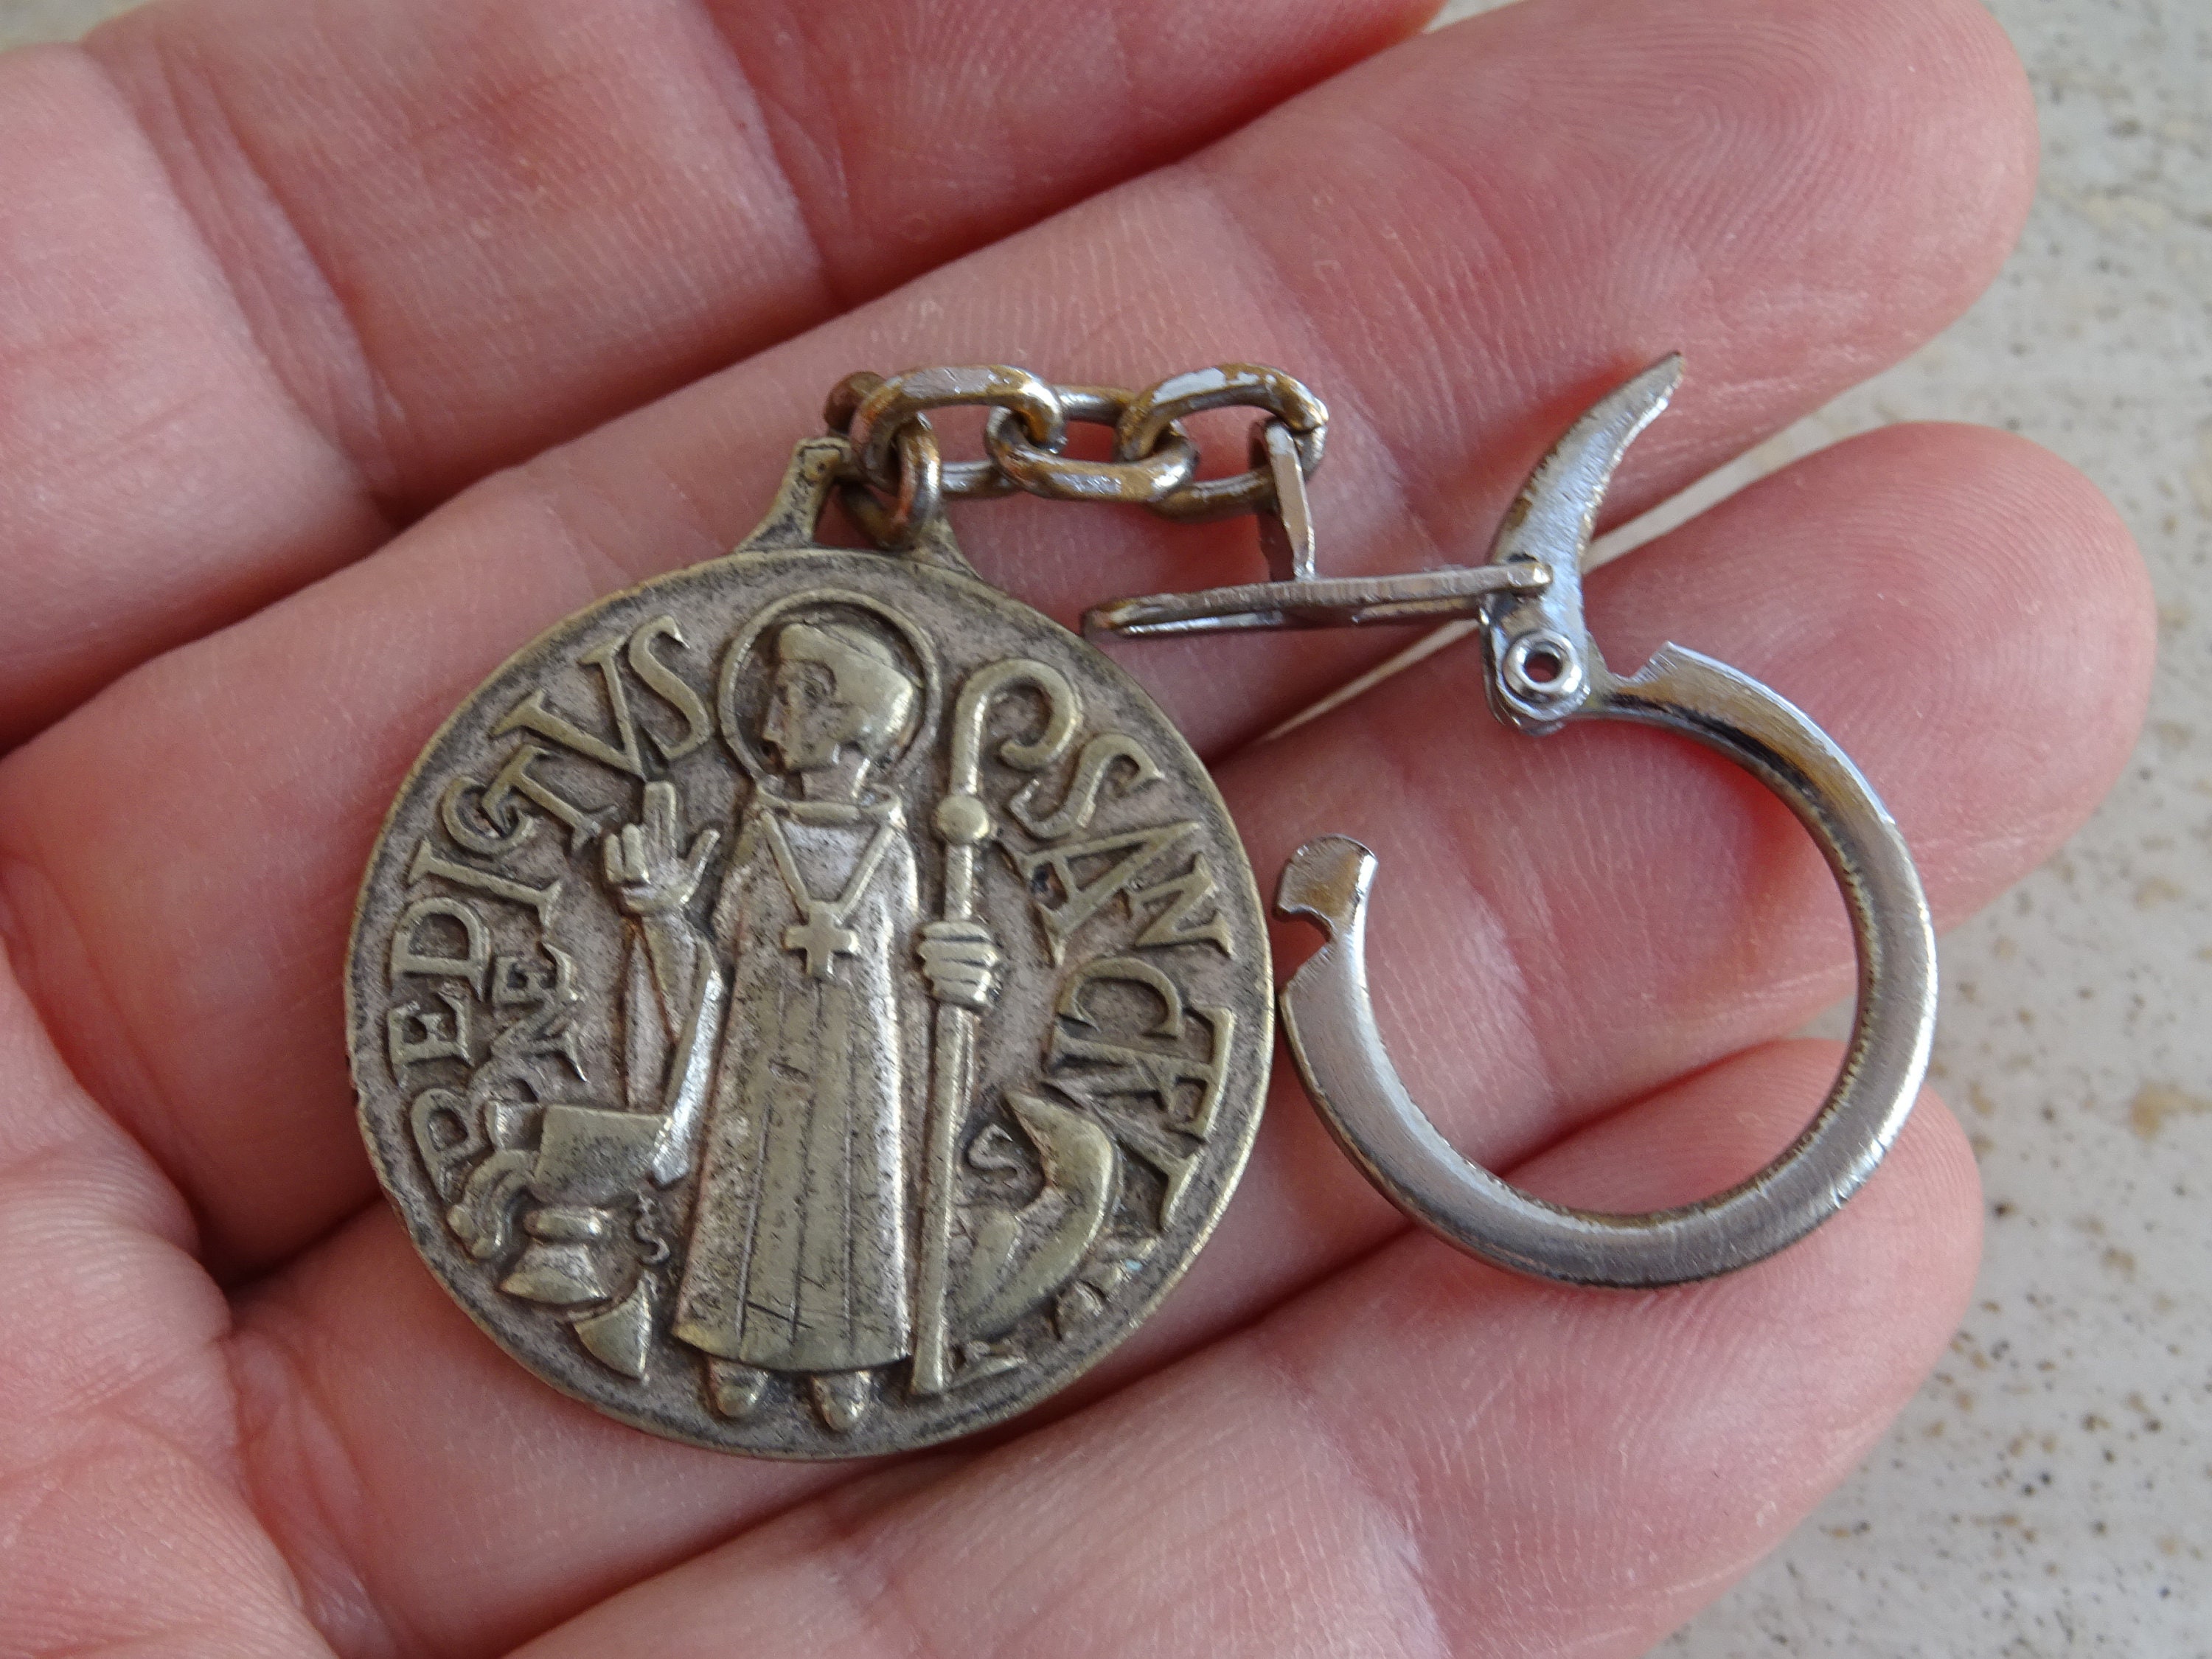 Saint Religious Medals, Saint Benedict Medals, Gifts Relics